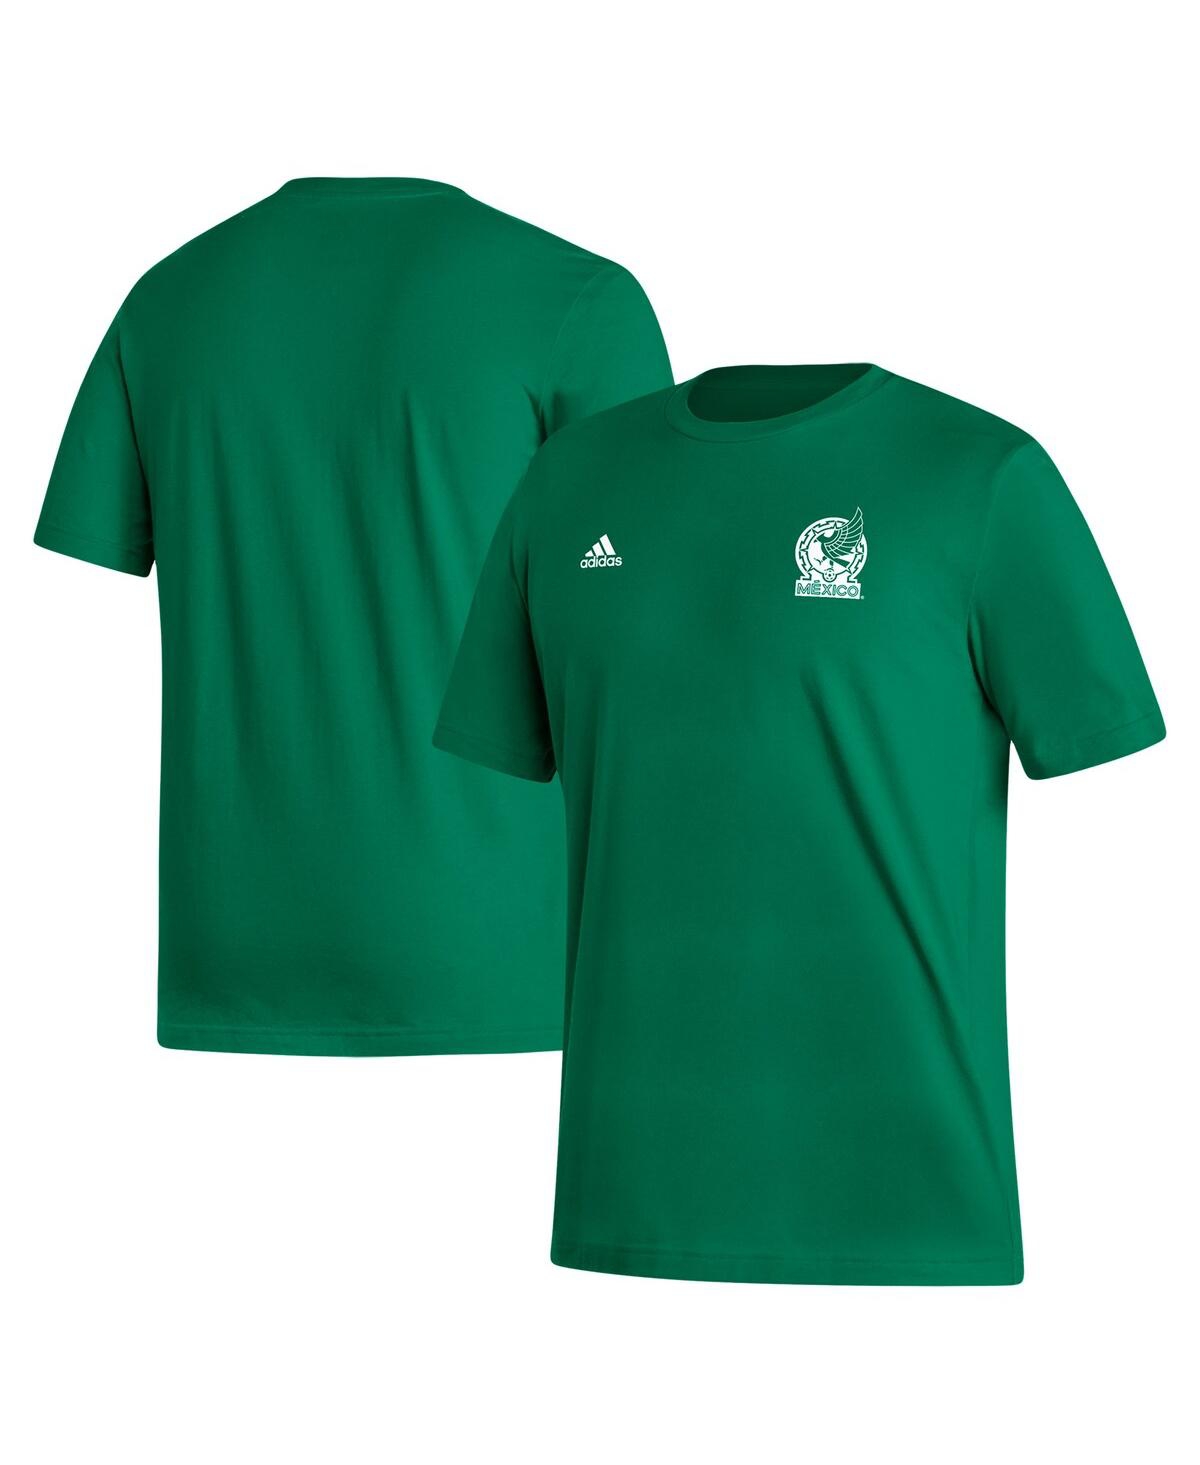 Shop Adidas Originals Men's Adidas Kelly Green Mexico National Team Crest T-shirt